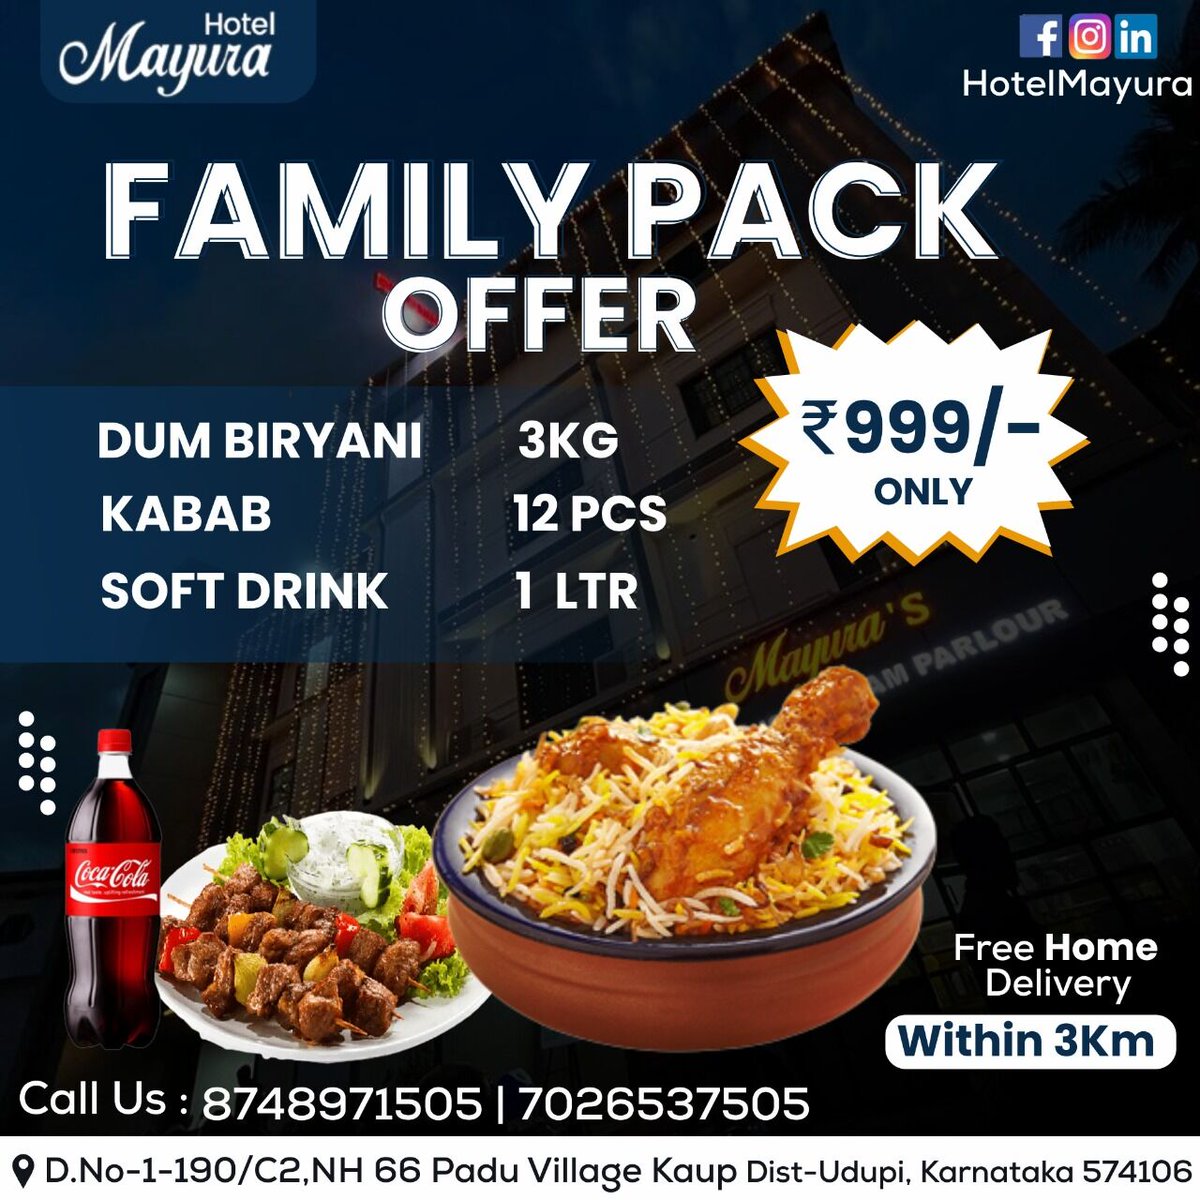 Family Pack Offer 

Dum Biryani    𝟯𝗞𝗚
Kabab    𝟭𝟮𝗣𝗖𝗦 
Soft Drink  𝟭𝗟𝗧𝗥

Only 𝗥𝗦 𝟵𝟵𝟵/-

Free Home Delivery
Order Now 

#besthotel #hotel #restaurant #bestrestaurant #dumbirayani #bestdumbirayani #familypack #offer #BiryaniLove #biryanirice #familypackoffer #kabab